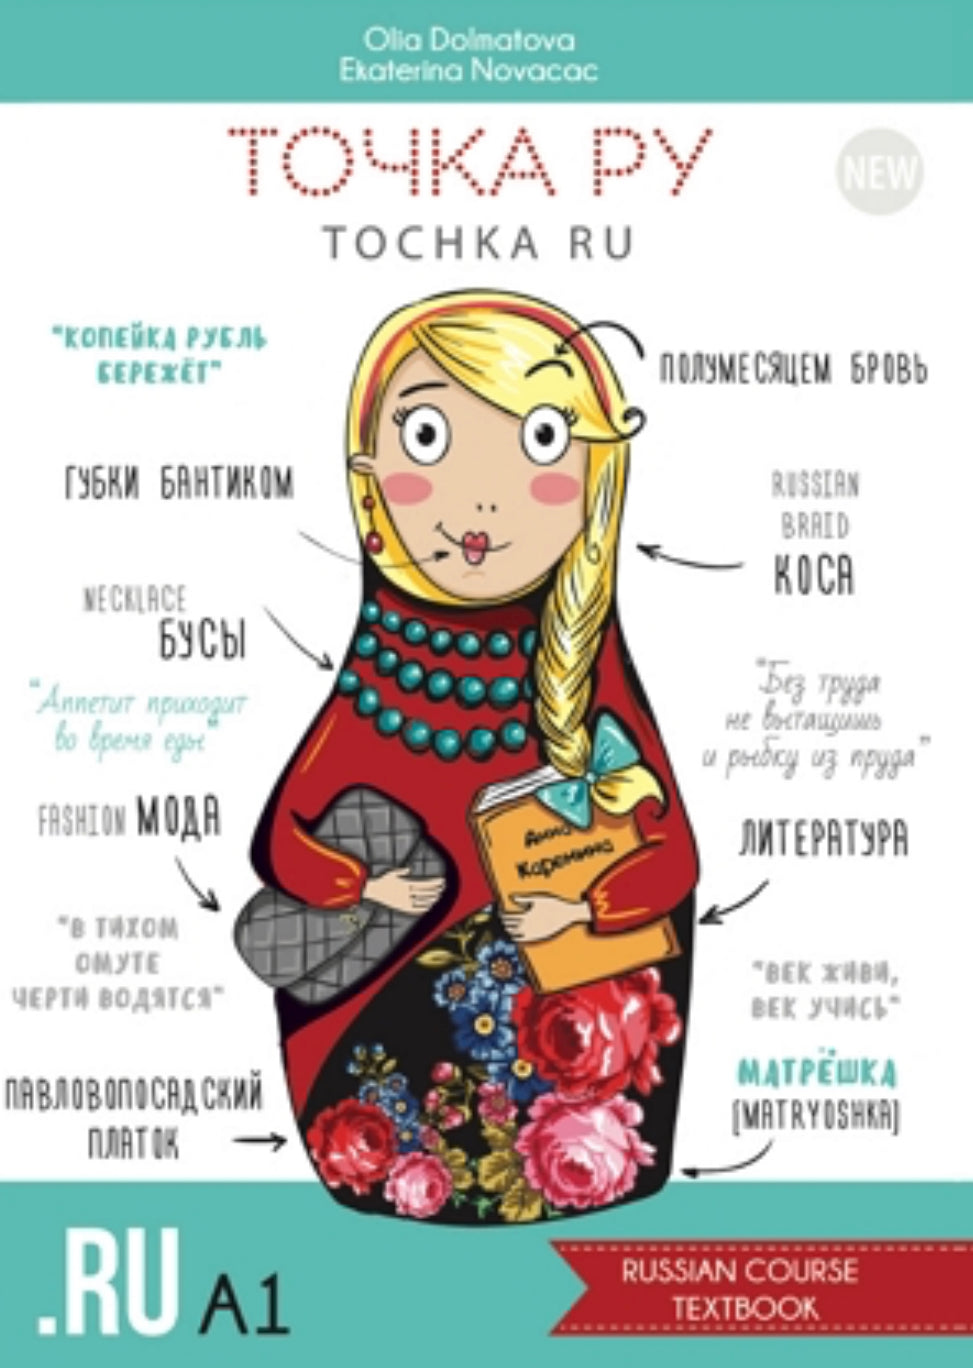 Tochka Ru Russian Course: Complete set A1 PDF (Spanish edition)